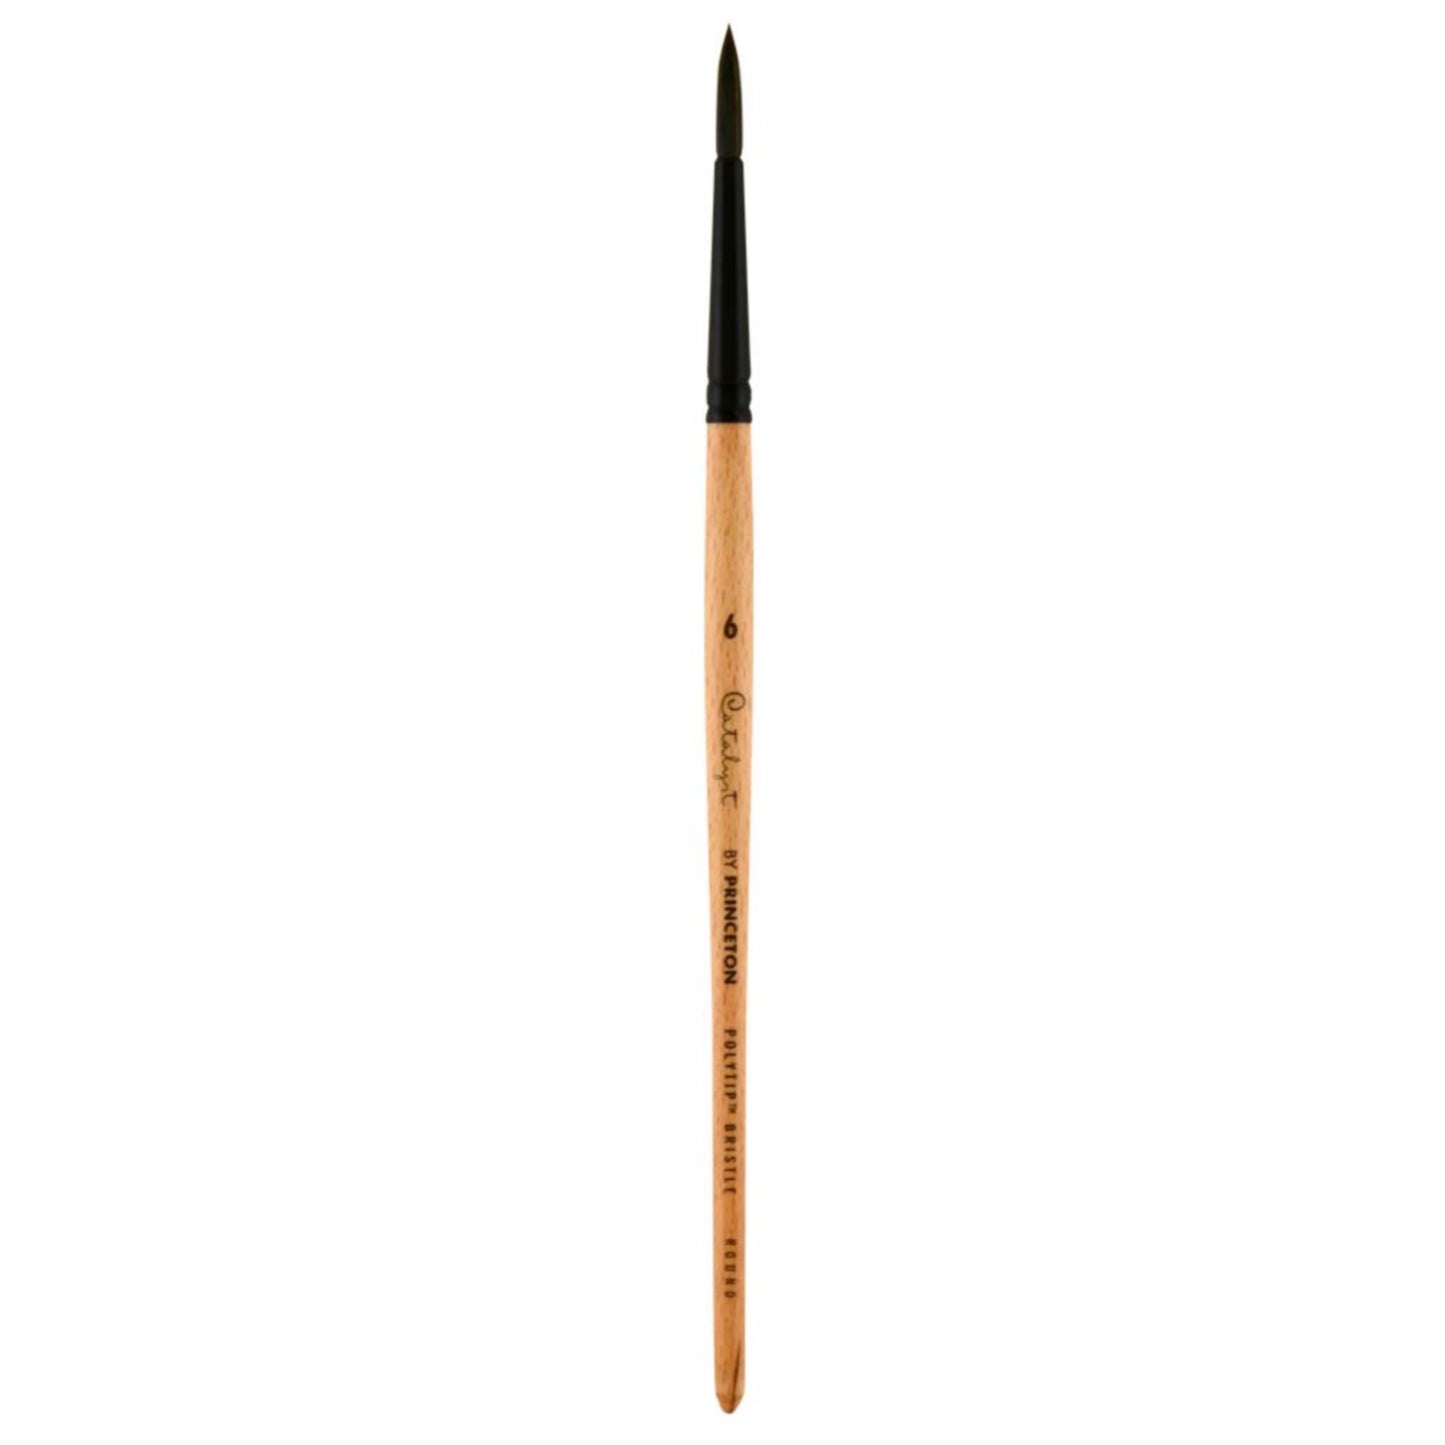 Princeton Catalyst Polytip Bristle Short-Handle Paint Brushes - Round / #6 by Princeton Art & Brush Co - K. A. Artist Shop